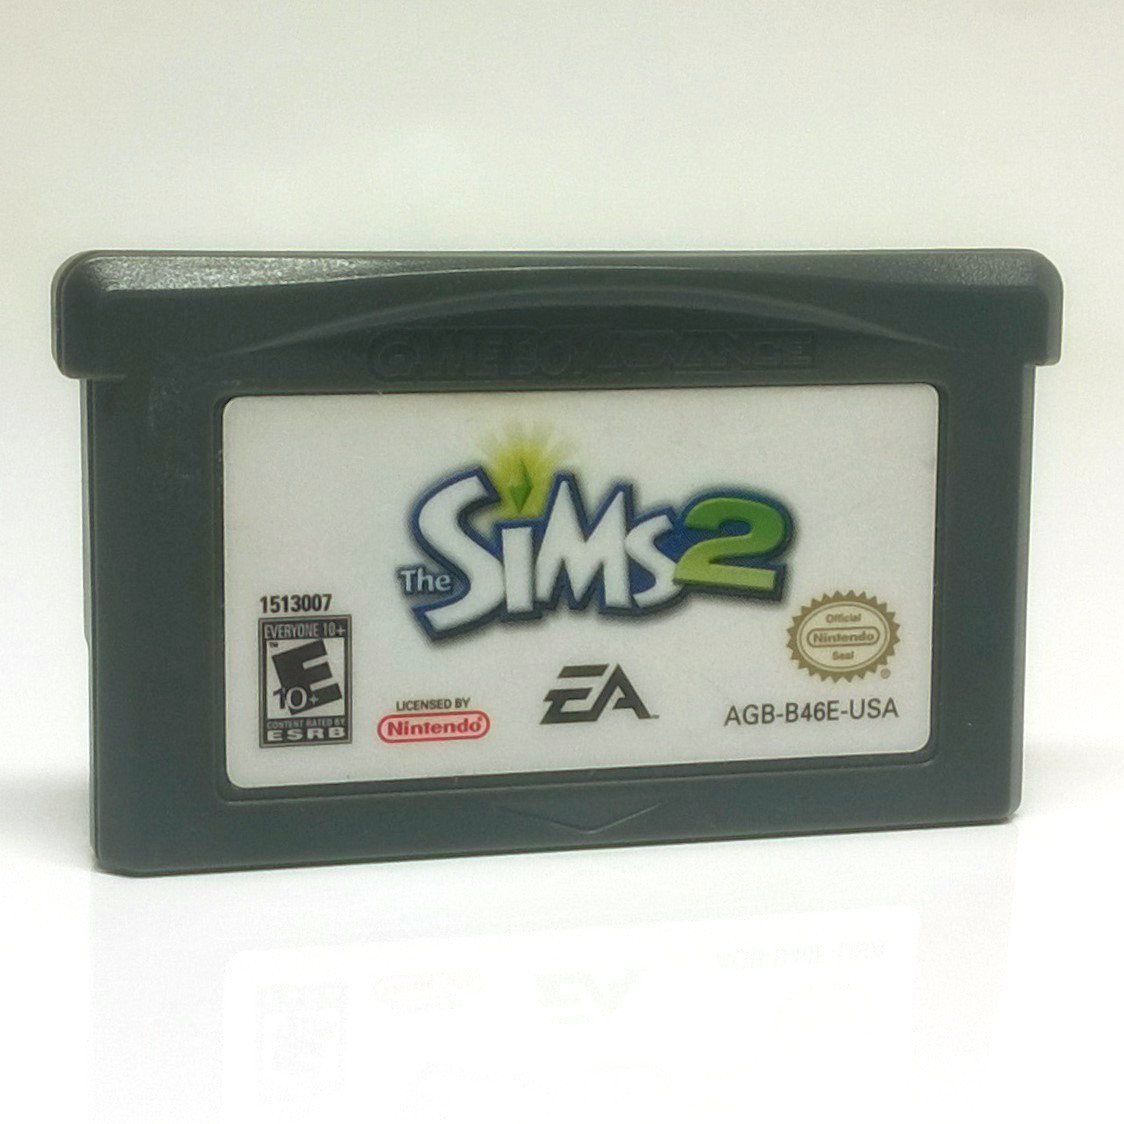 The Sims 2 Nintendo GBA Game Boy Advance Game